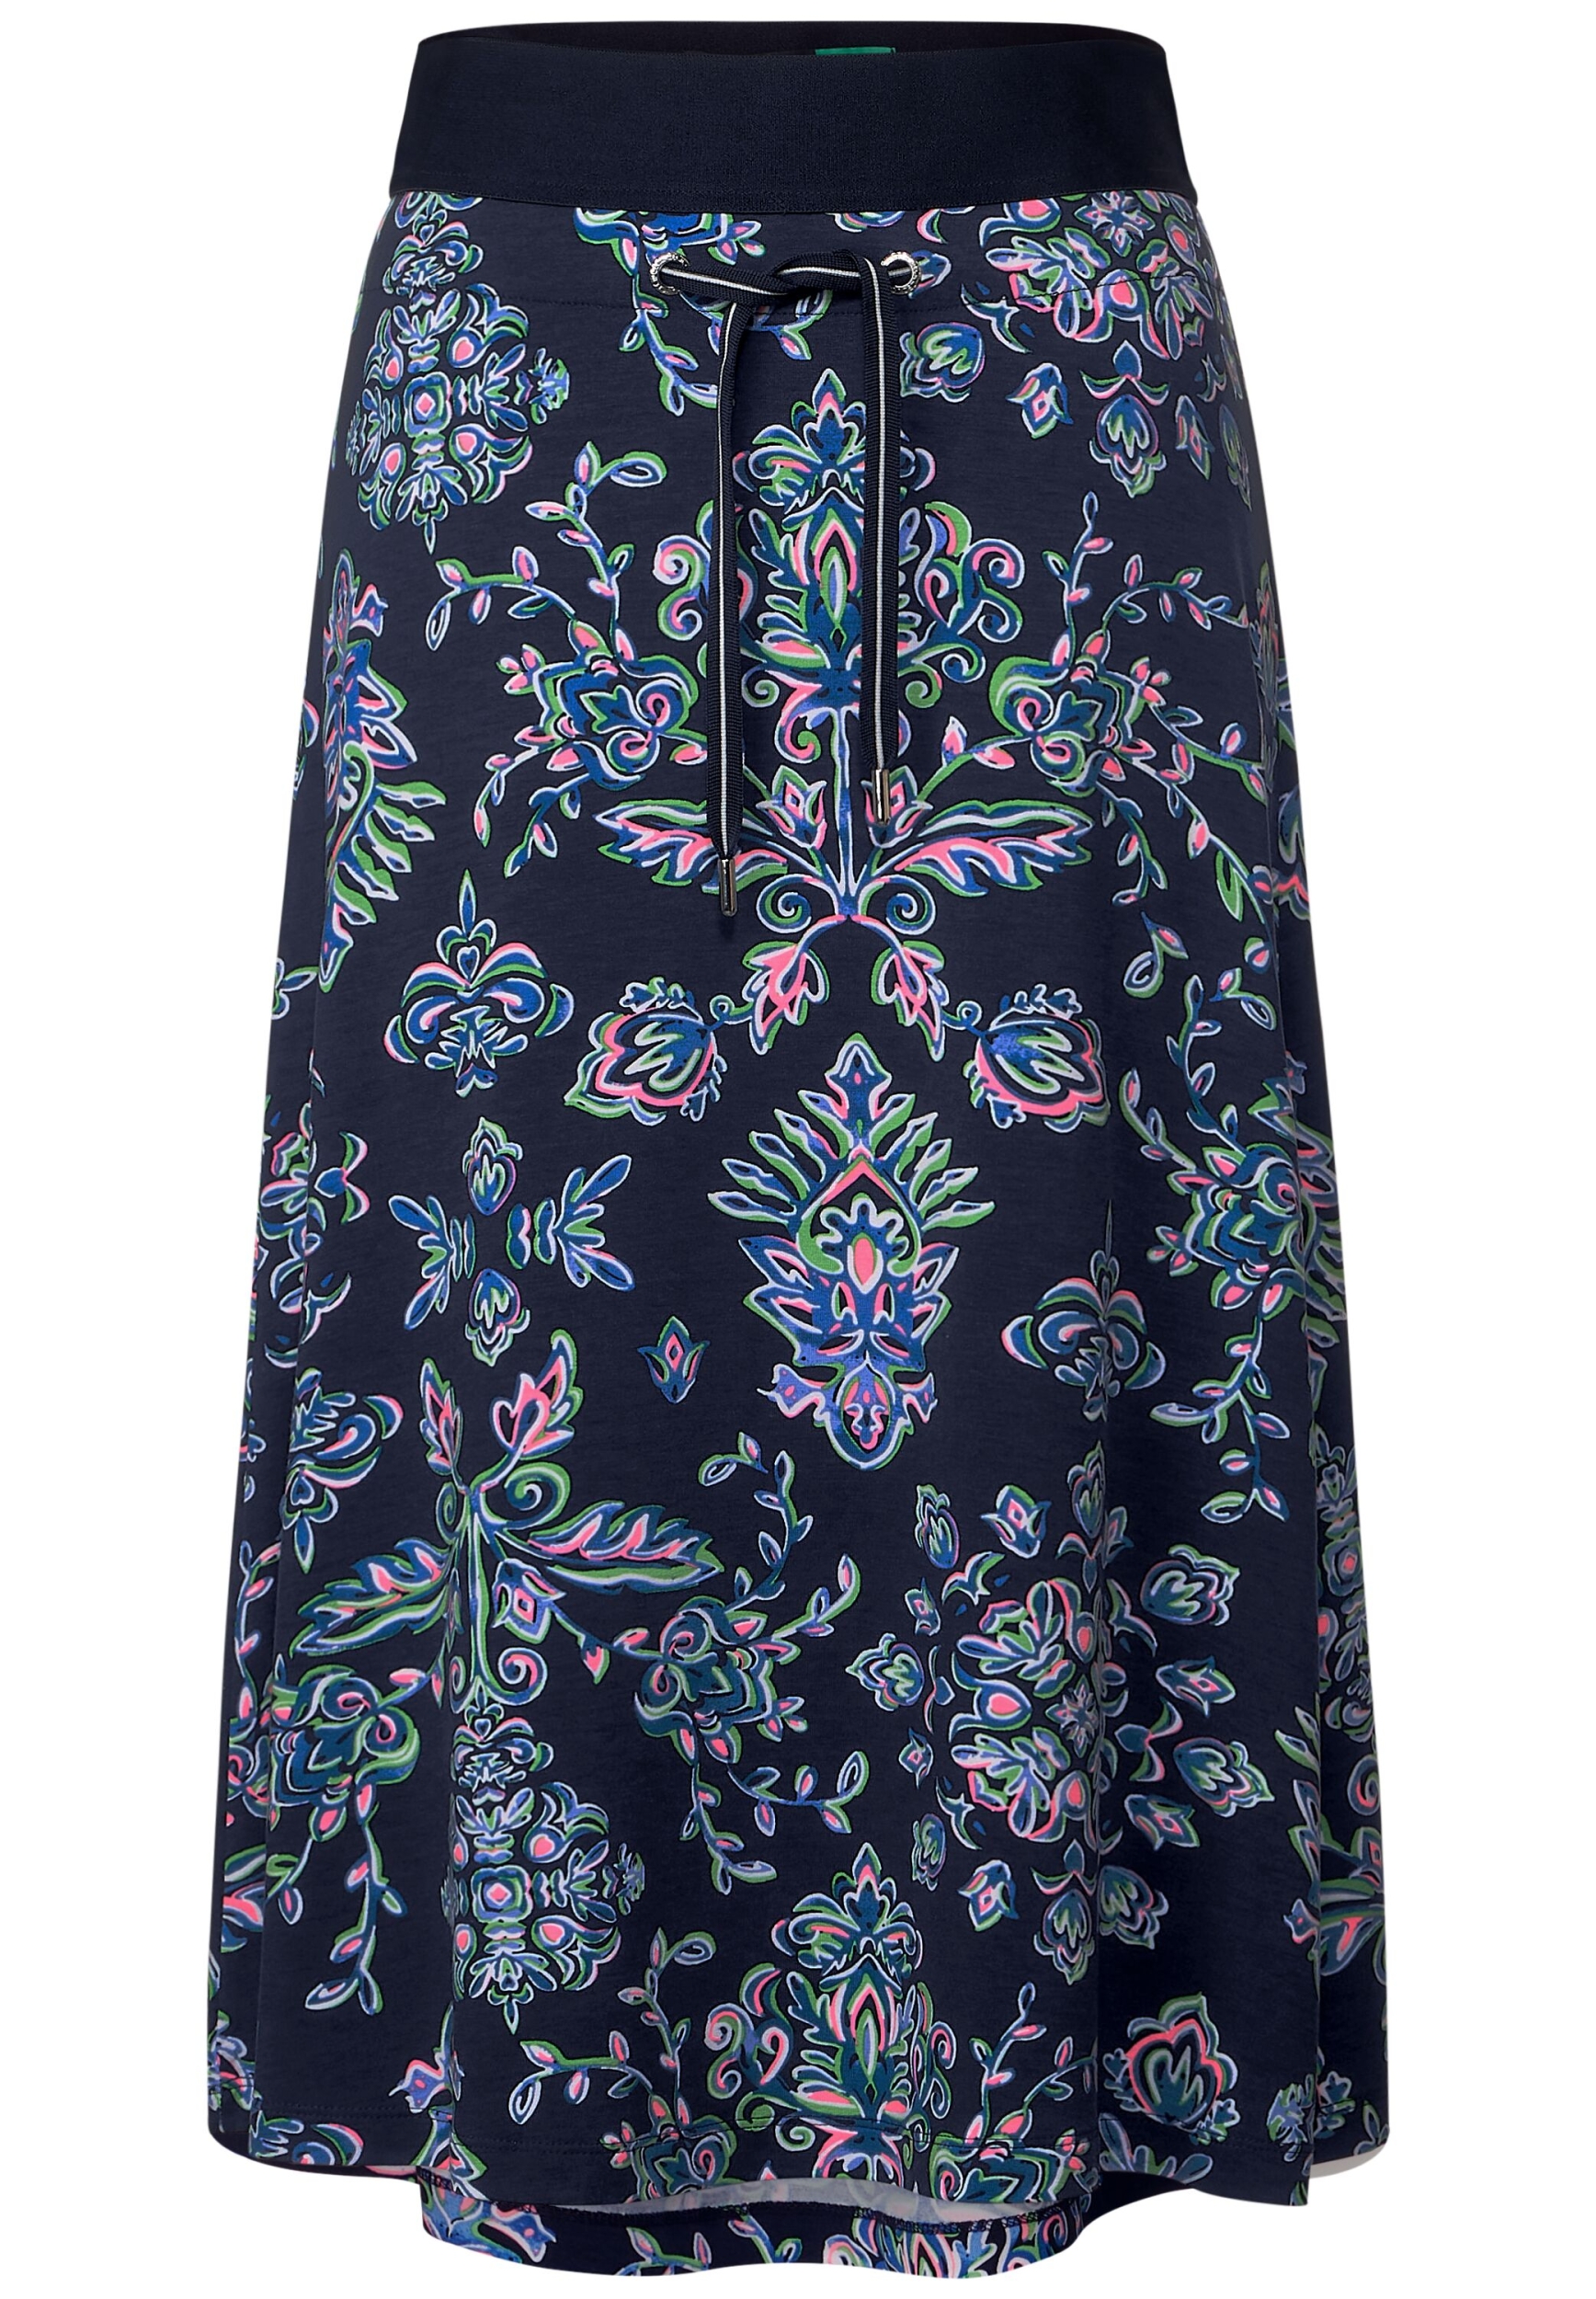 Skirt Lyocell washed | B361318-10369-XS XS blue | Indigo Style light |